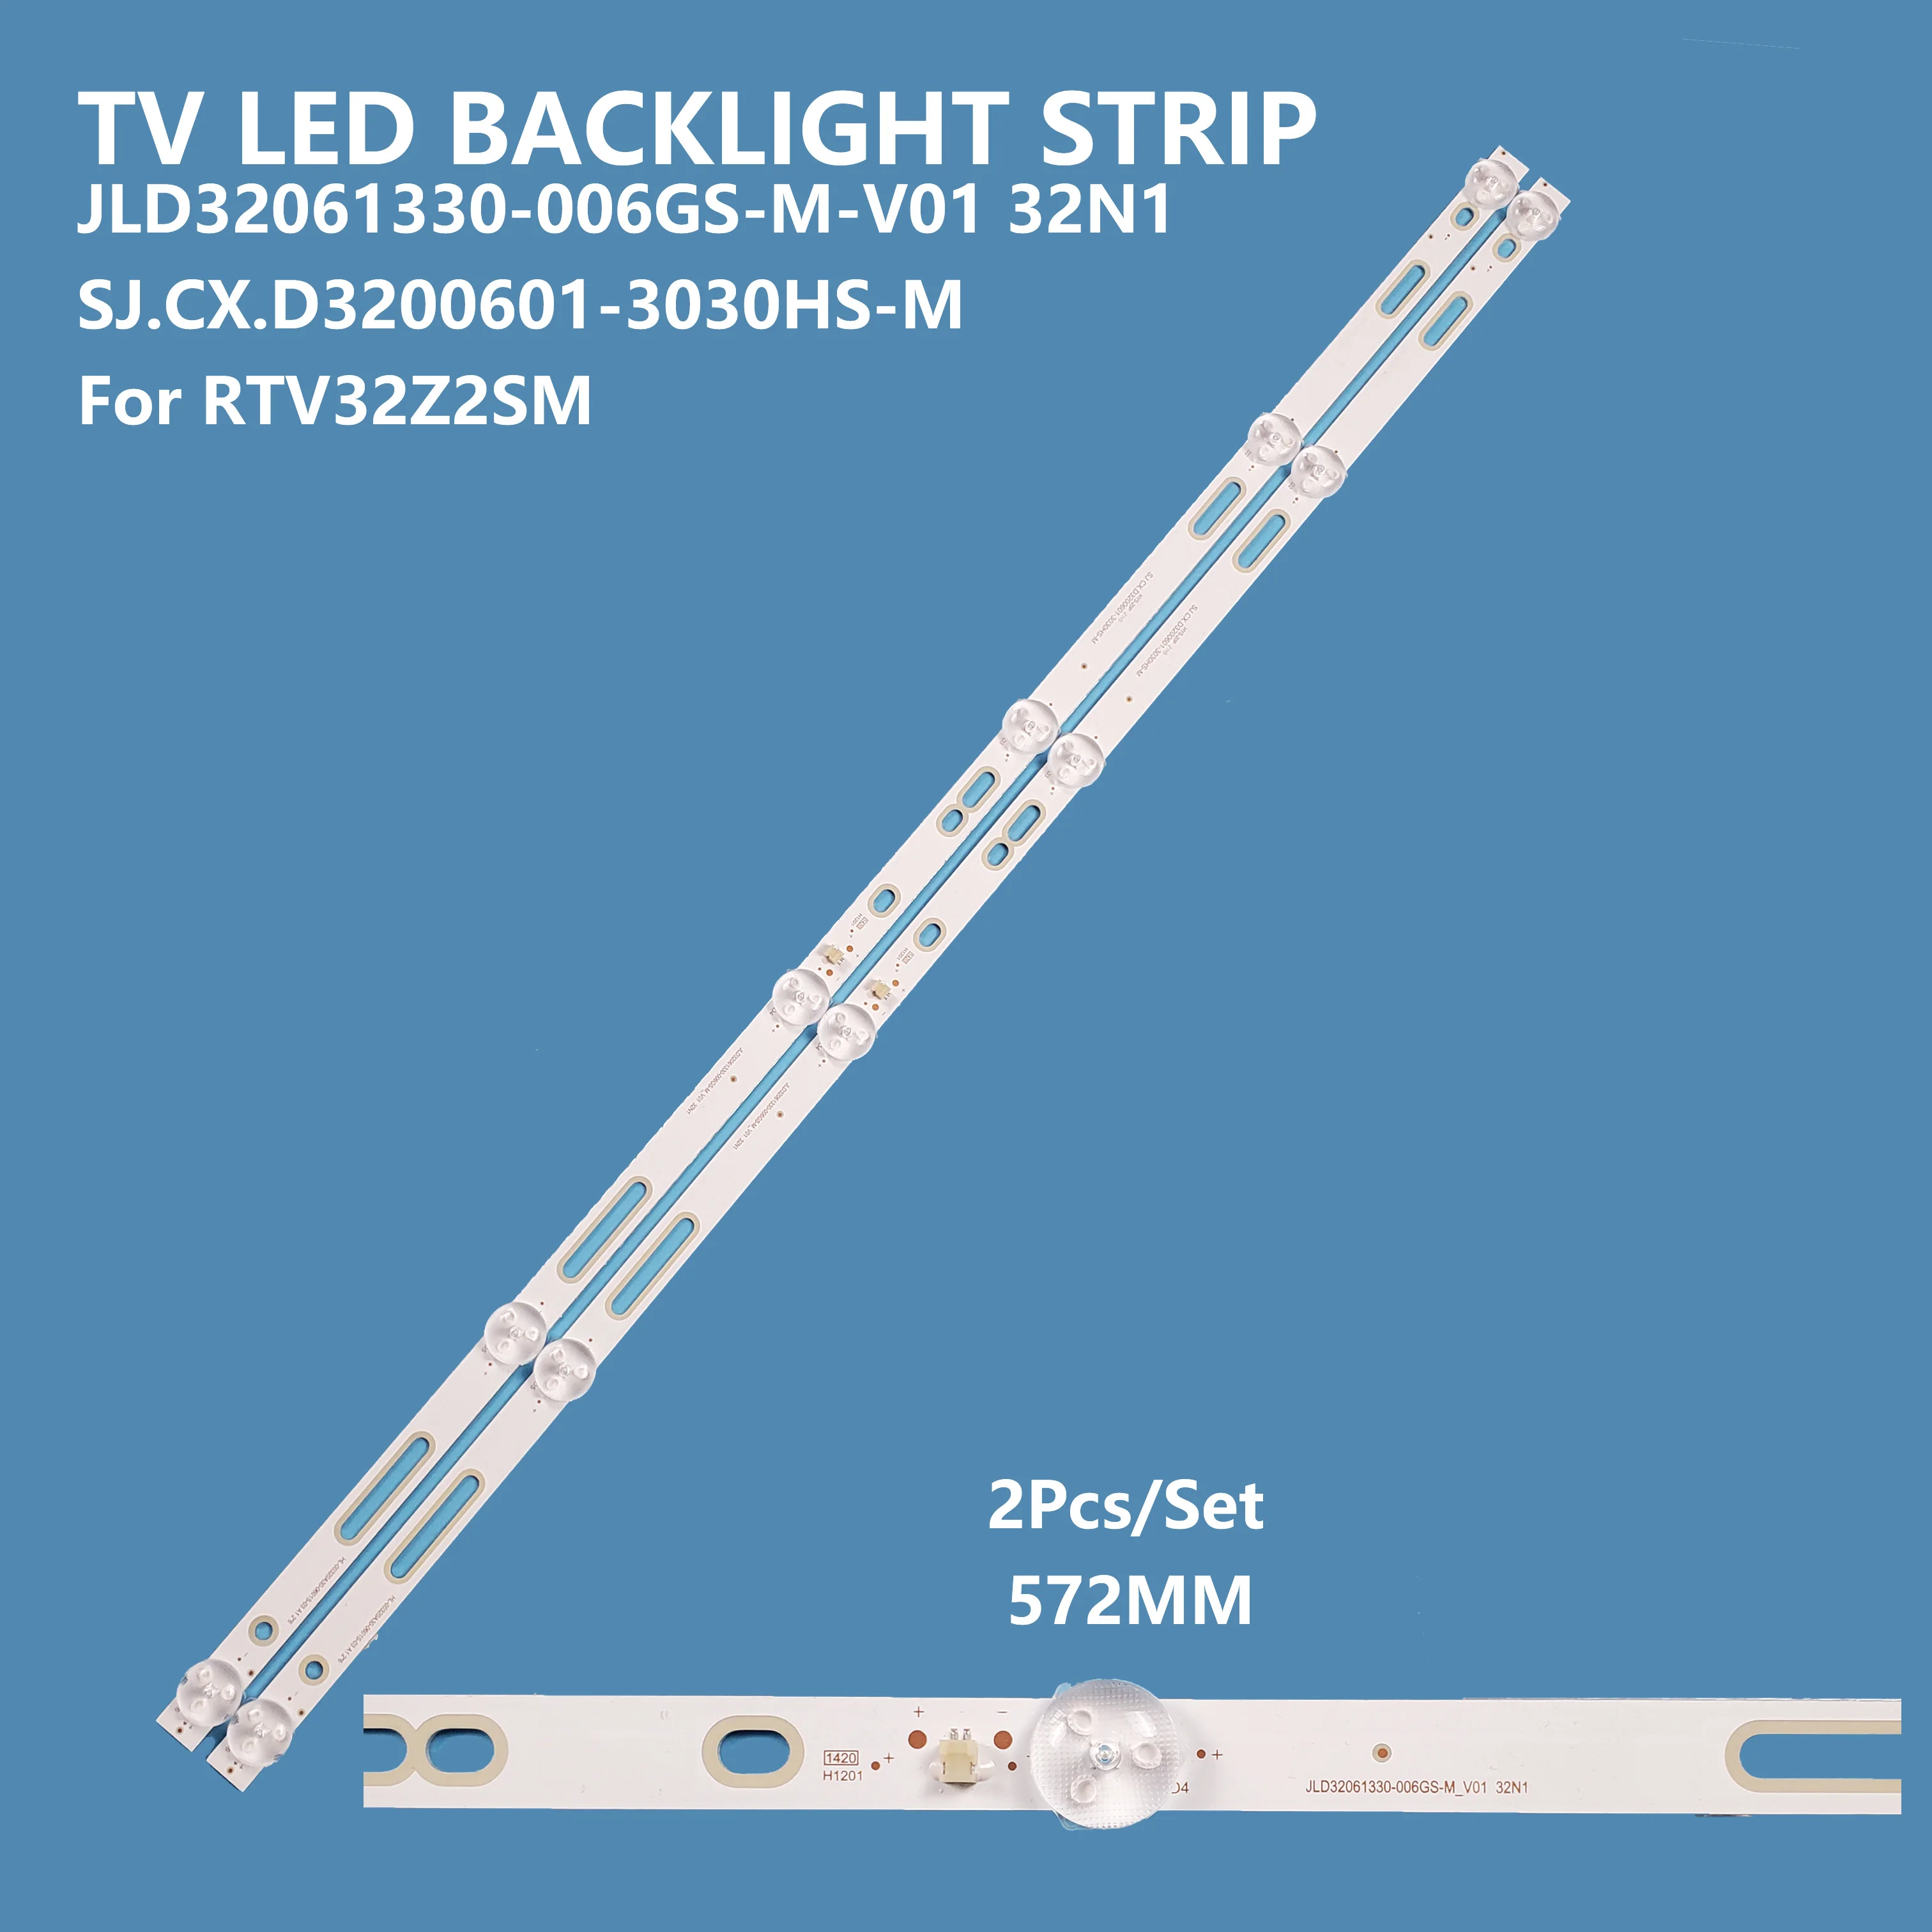 2Pcs/set LED Backlight Bar Light Strip JL.D32061330-006GS-M-V01 32N1 HL-00320A30-0601S-03 A1 for 32inch TV Accessories Repair